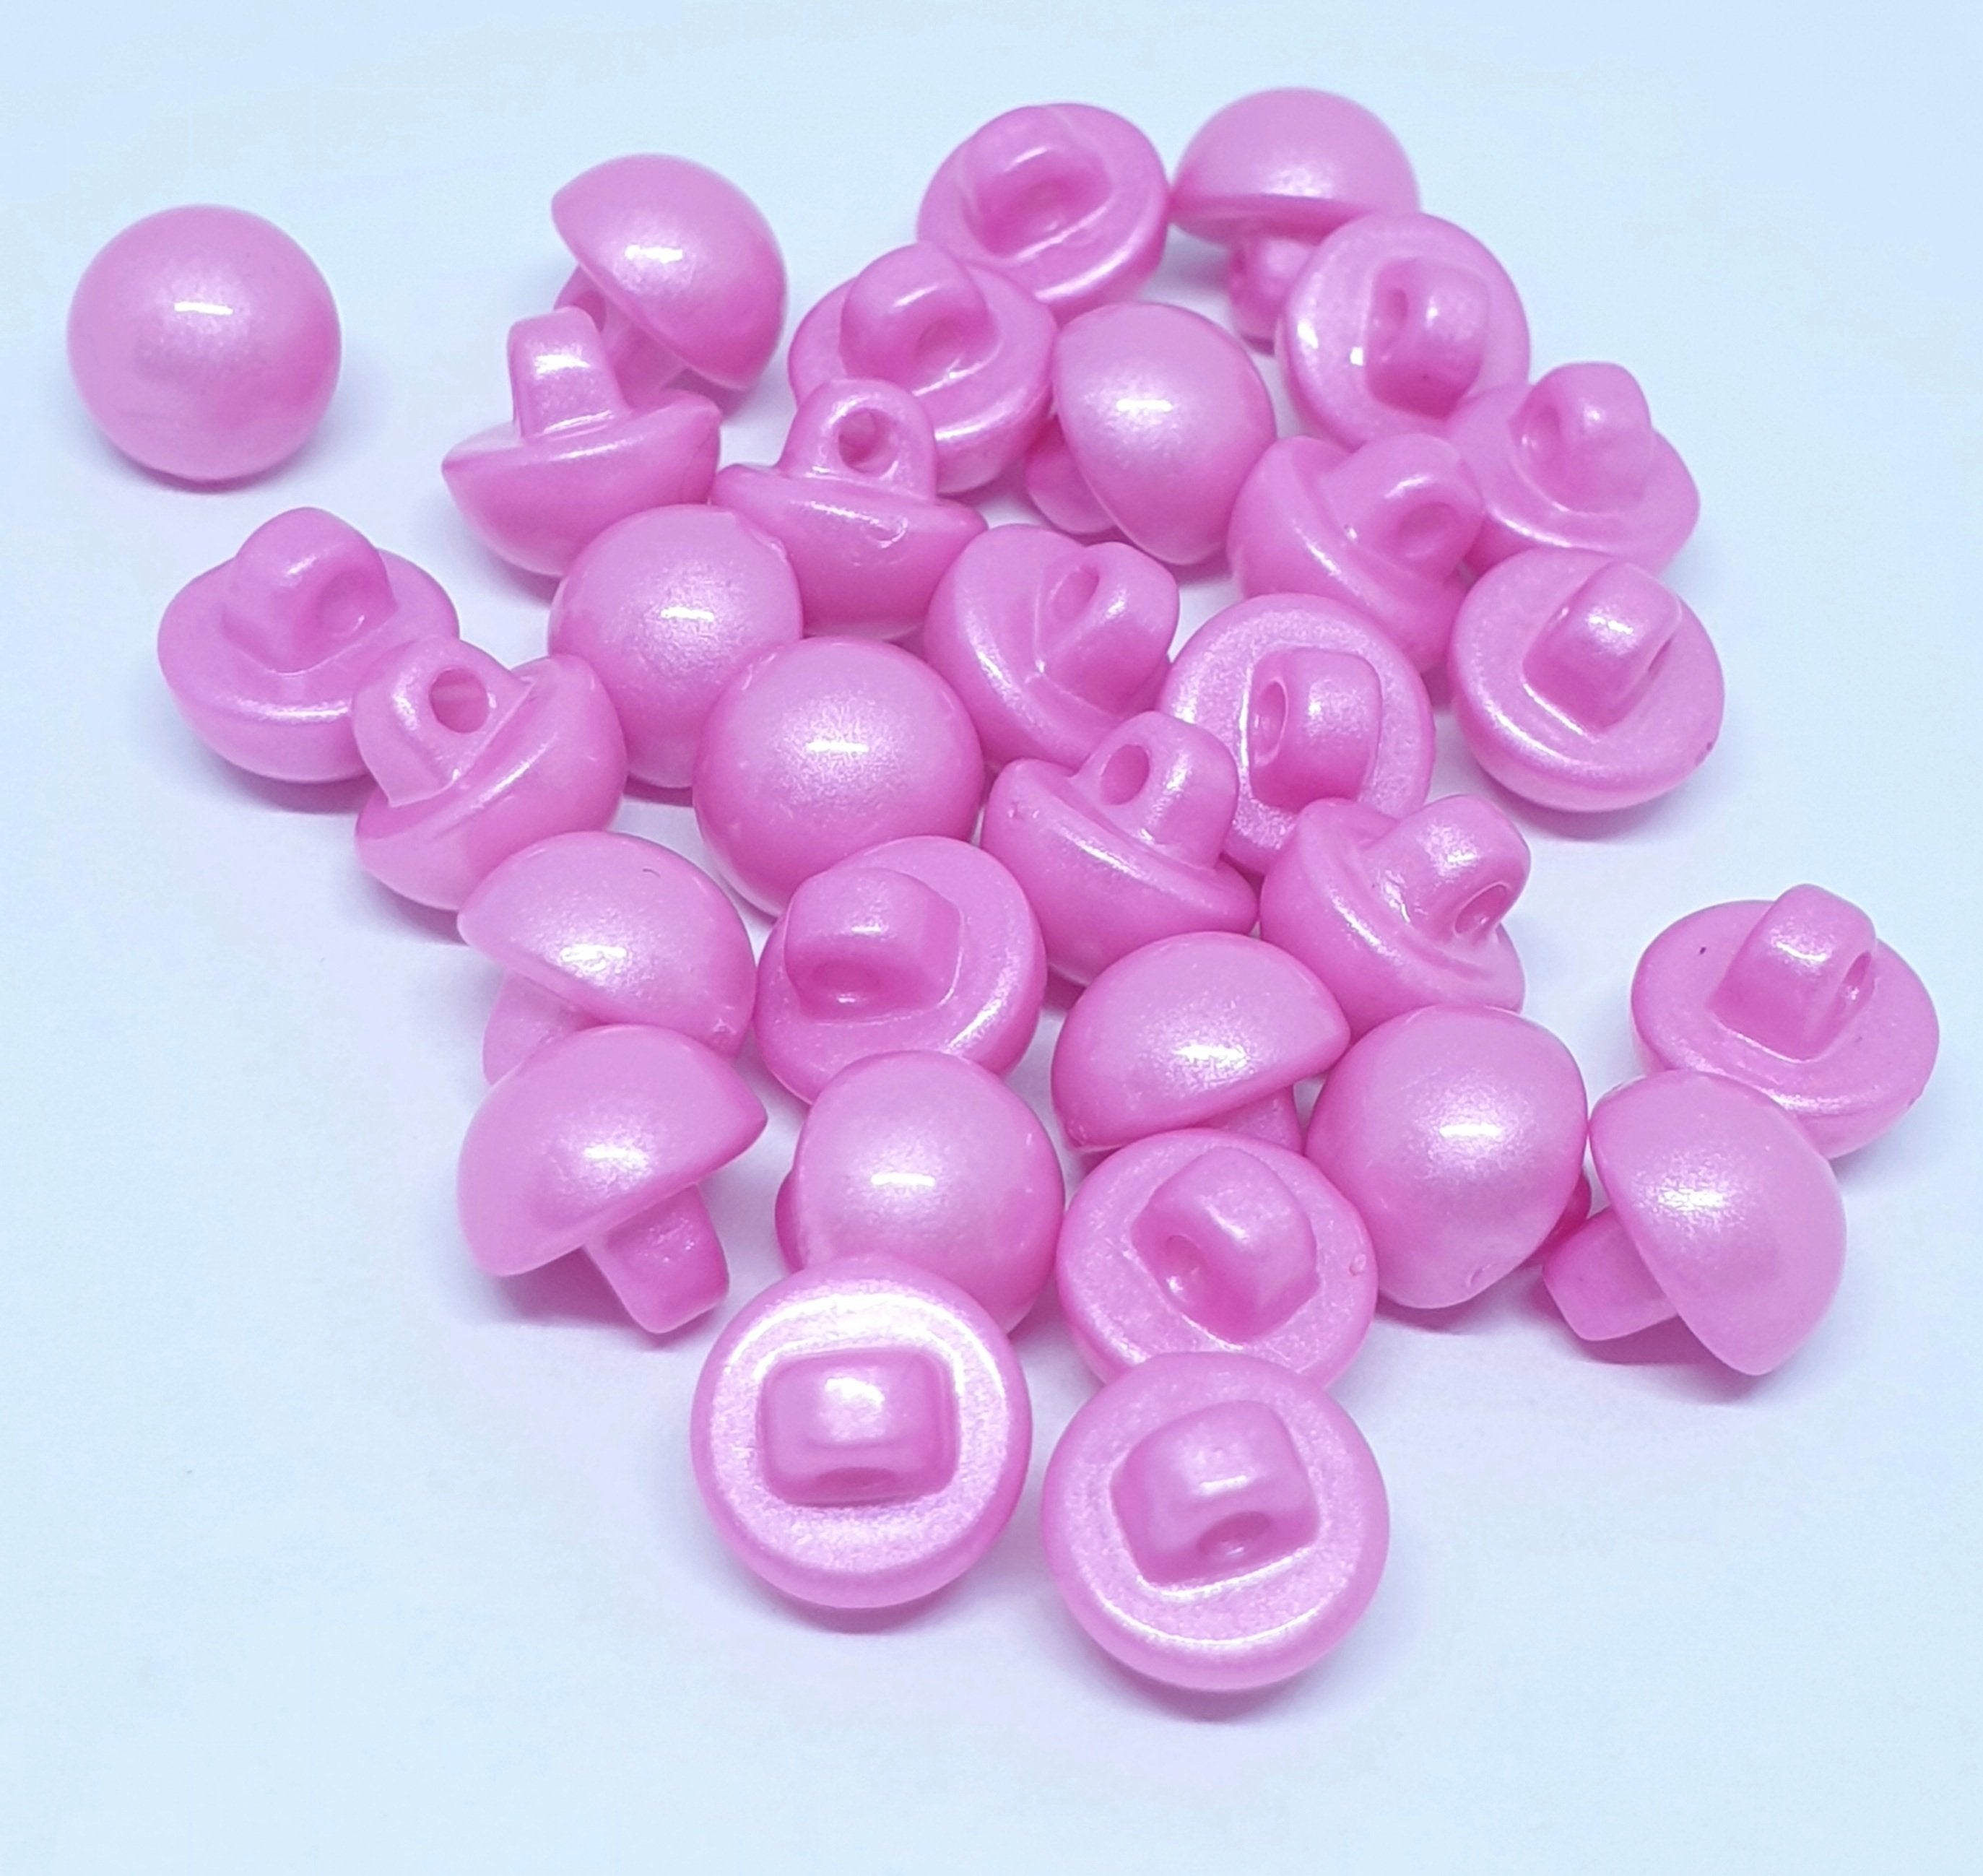 MajorCrafts 30pcs 10mm Light Rose Pink High-Grade Acrylic Small Round Sewing Mushroom Shank Buttons